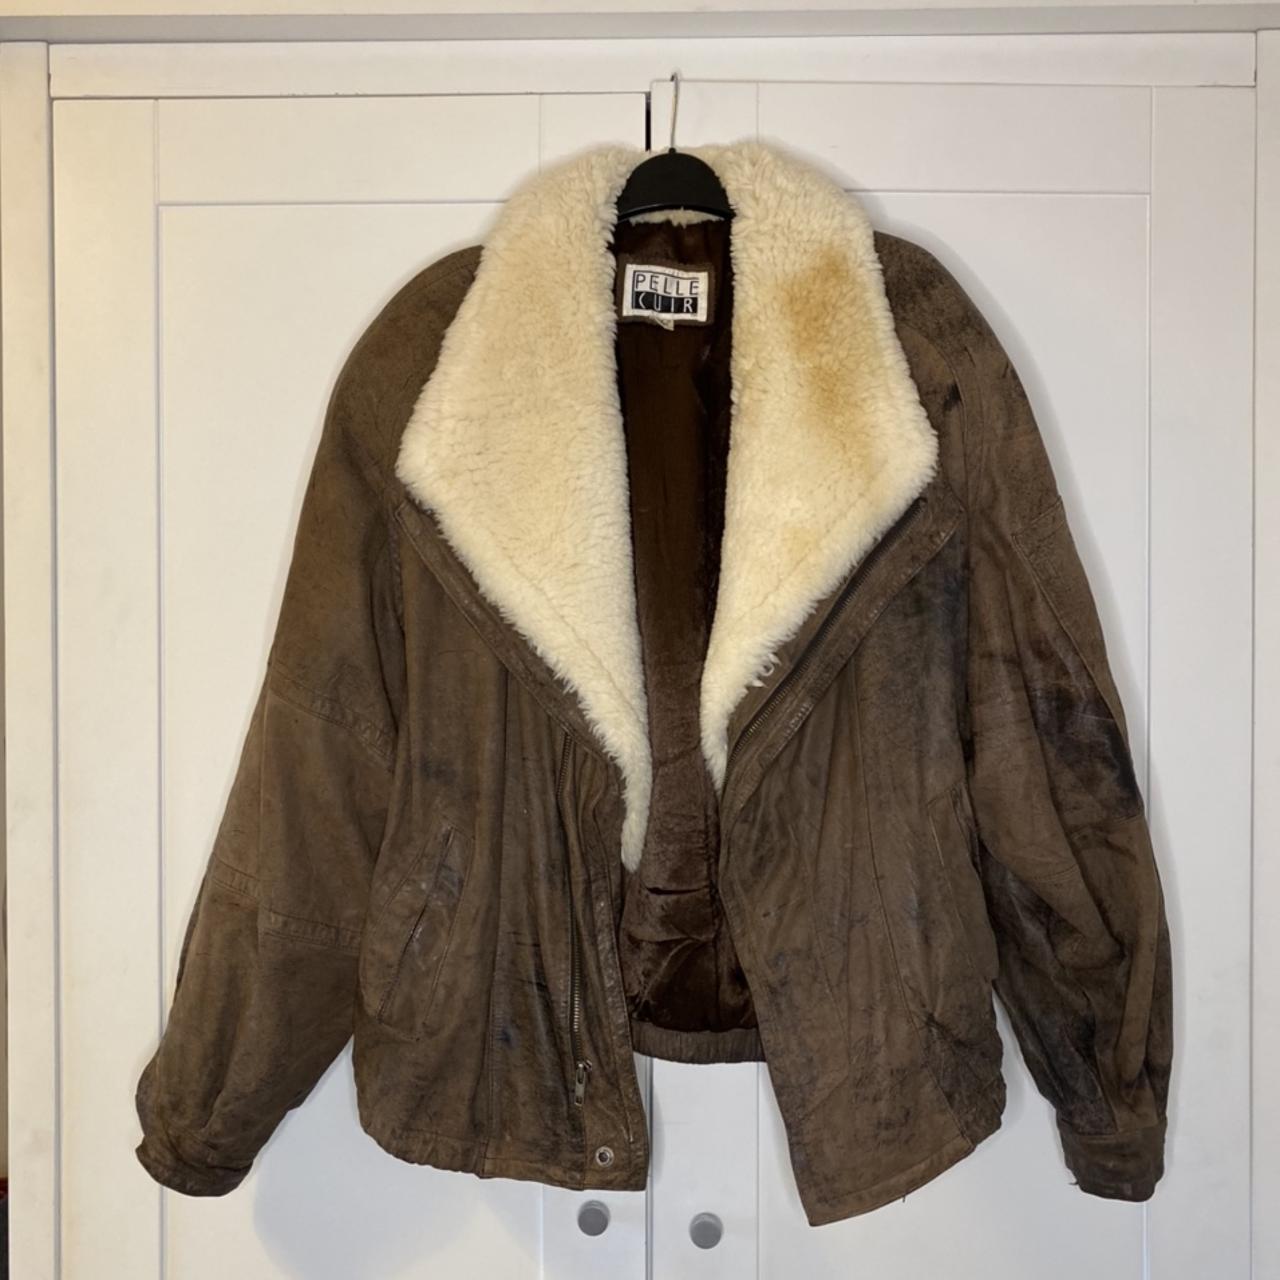 💥 Vintage Pelle Cuir leather shearling jacket. Rare... - Depop